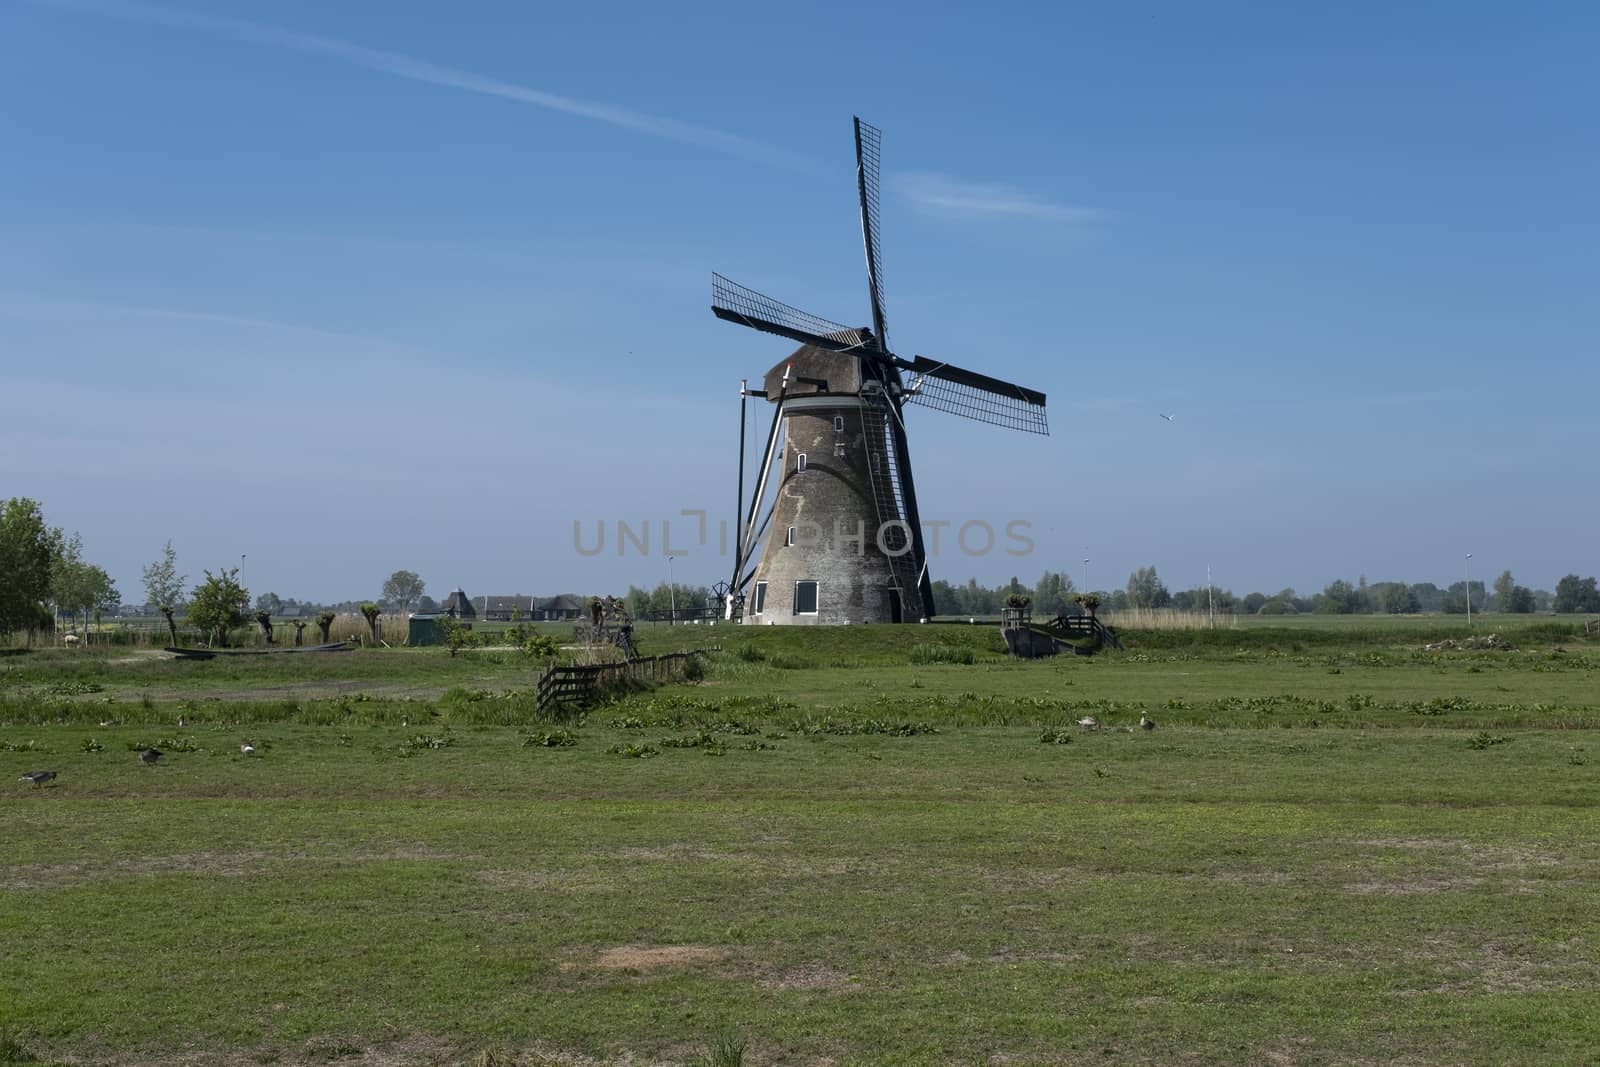 beautiful windmill landscape in the netherlands. Unesco Site.